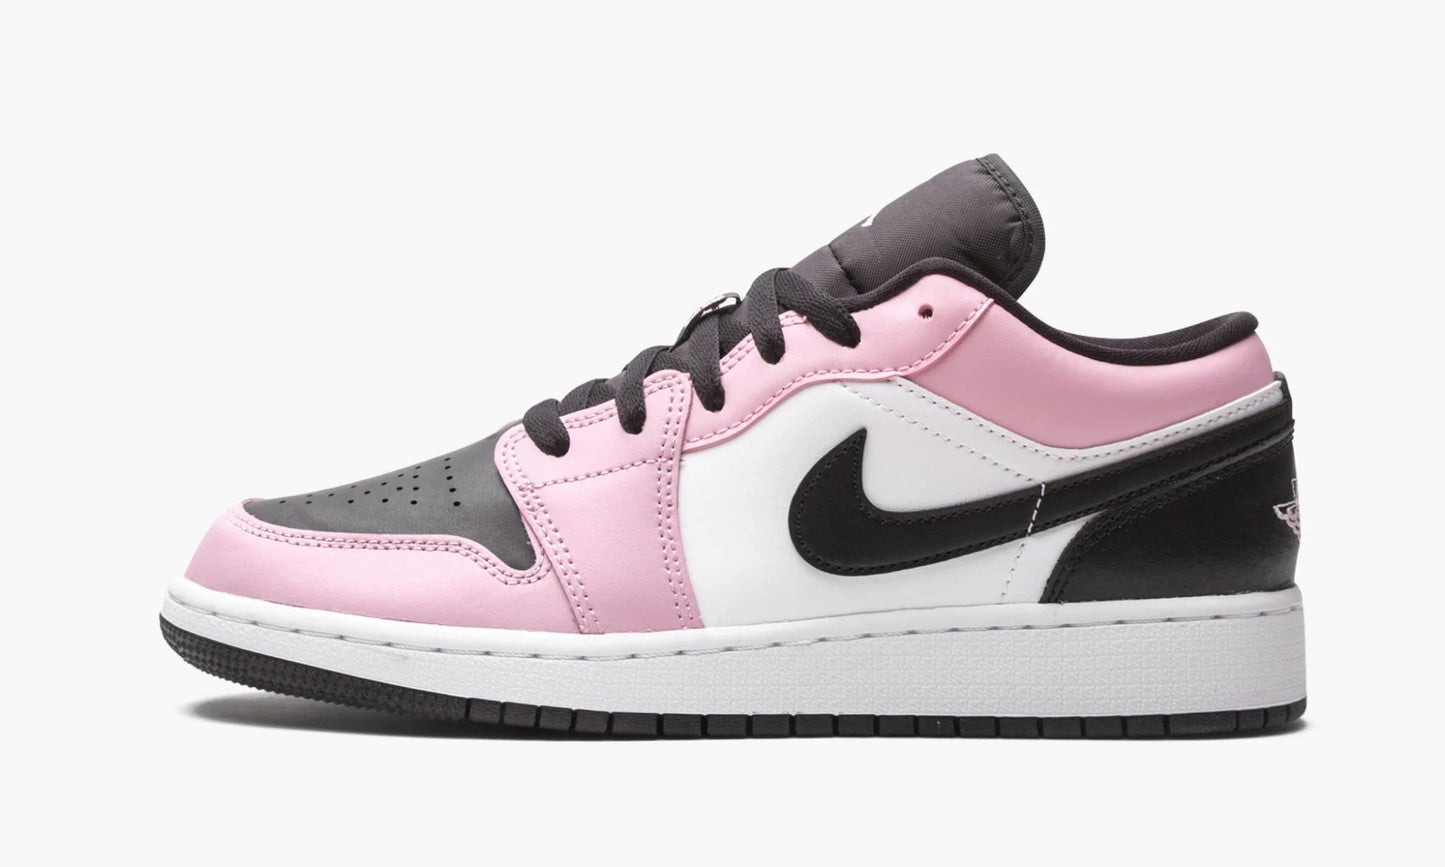 Nike Air Jordan 1 Low GS "Light Arctic Pink" - 554723 601 | Grailshop